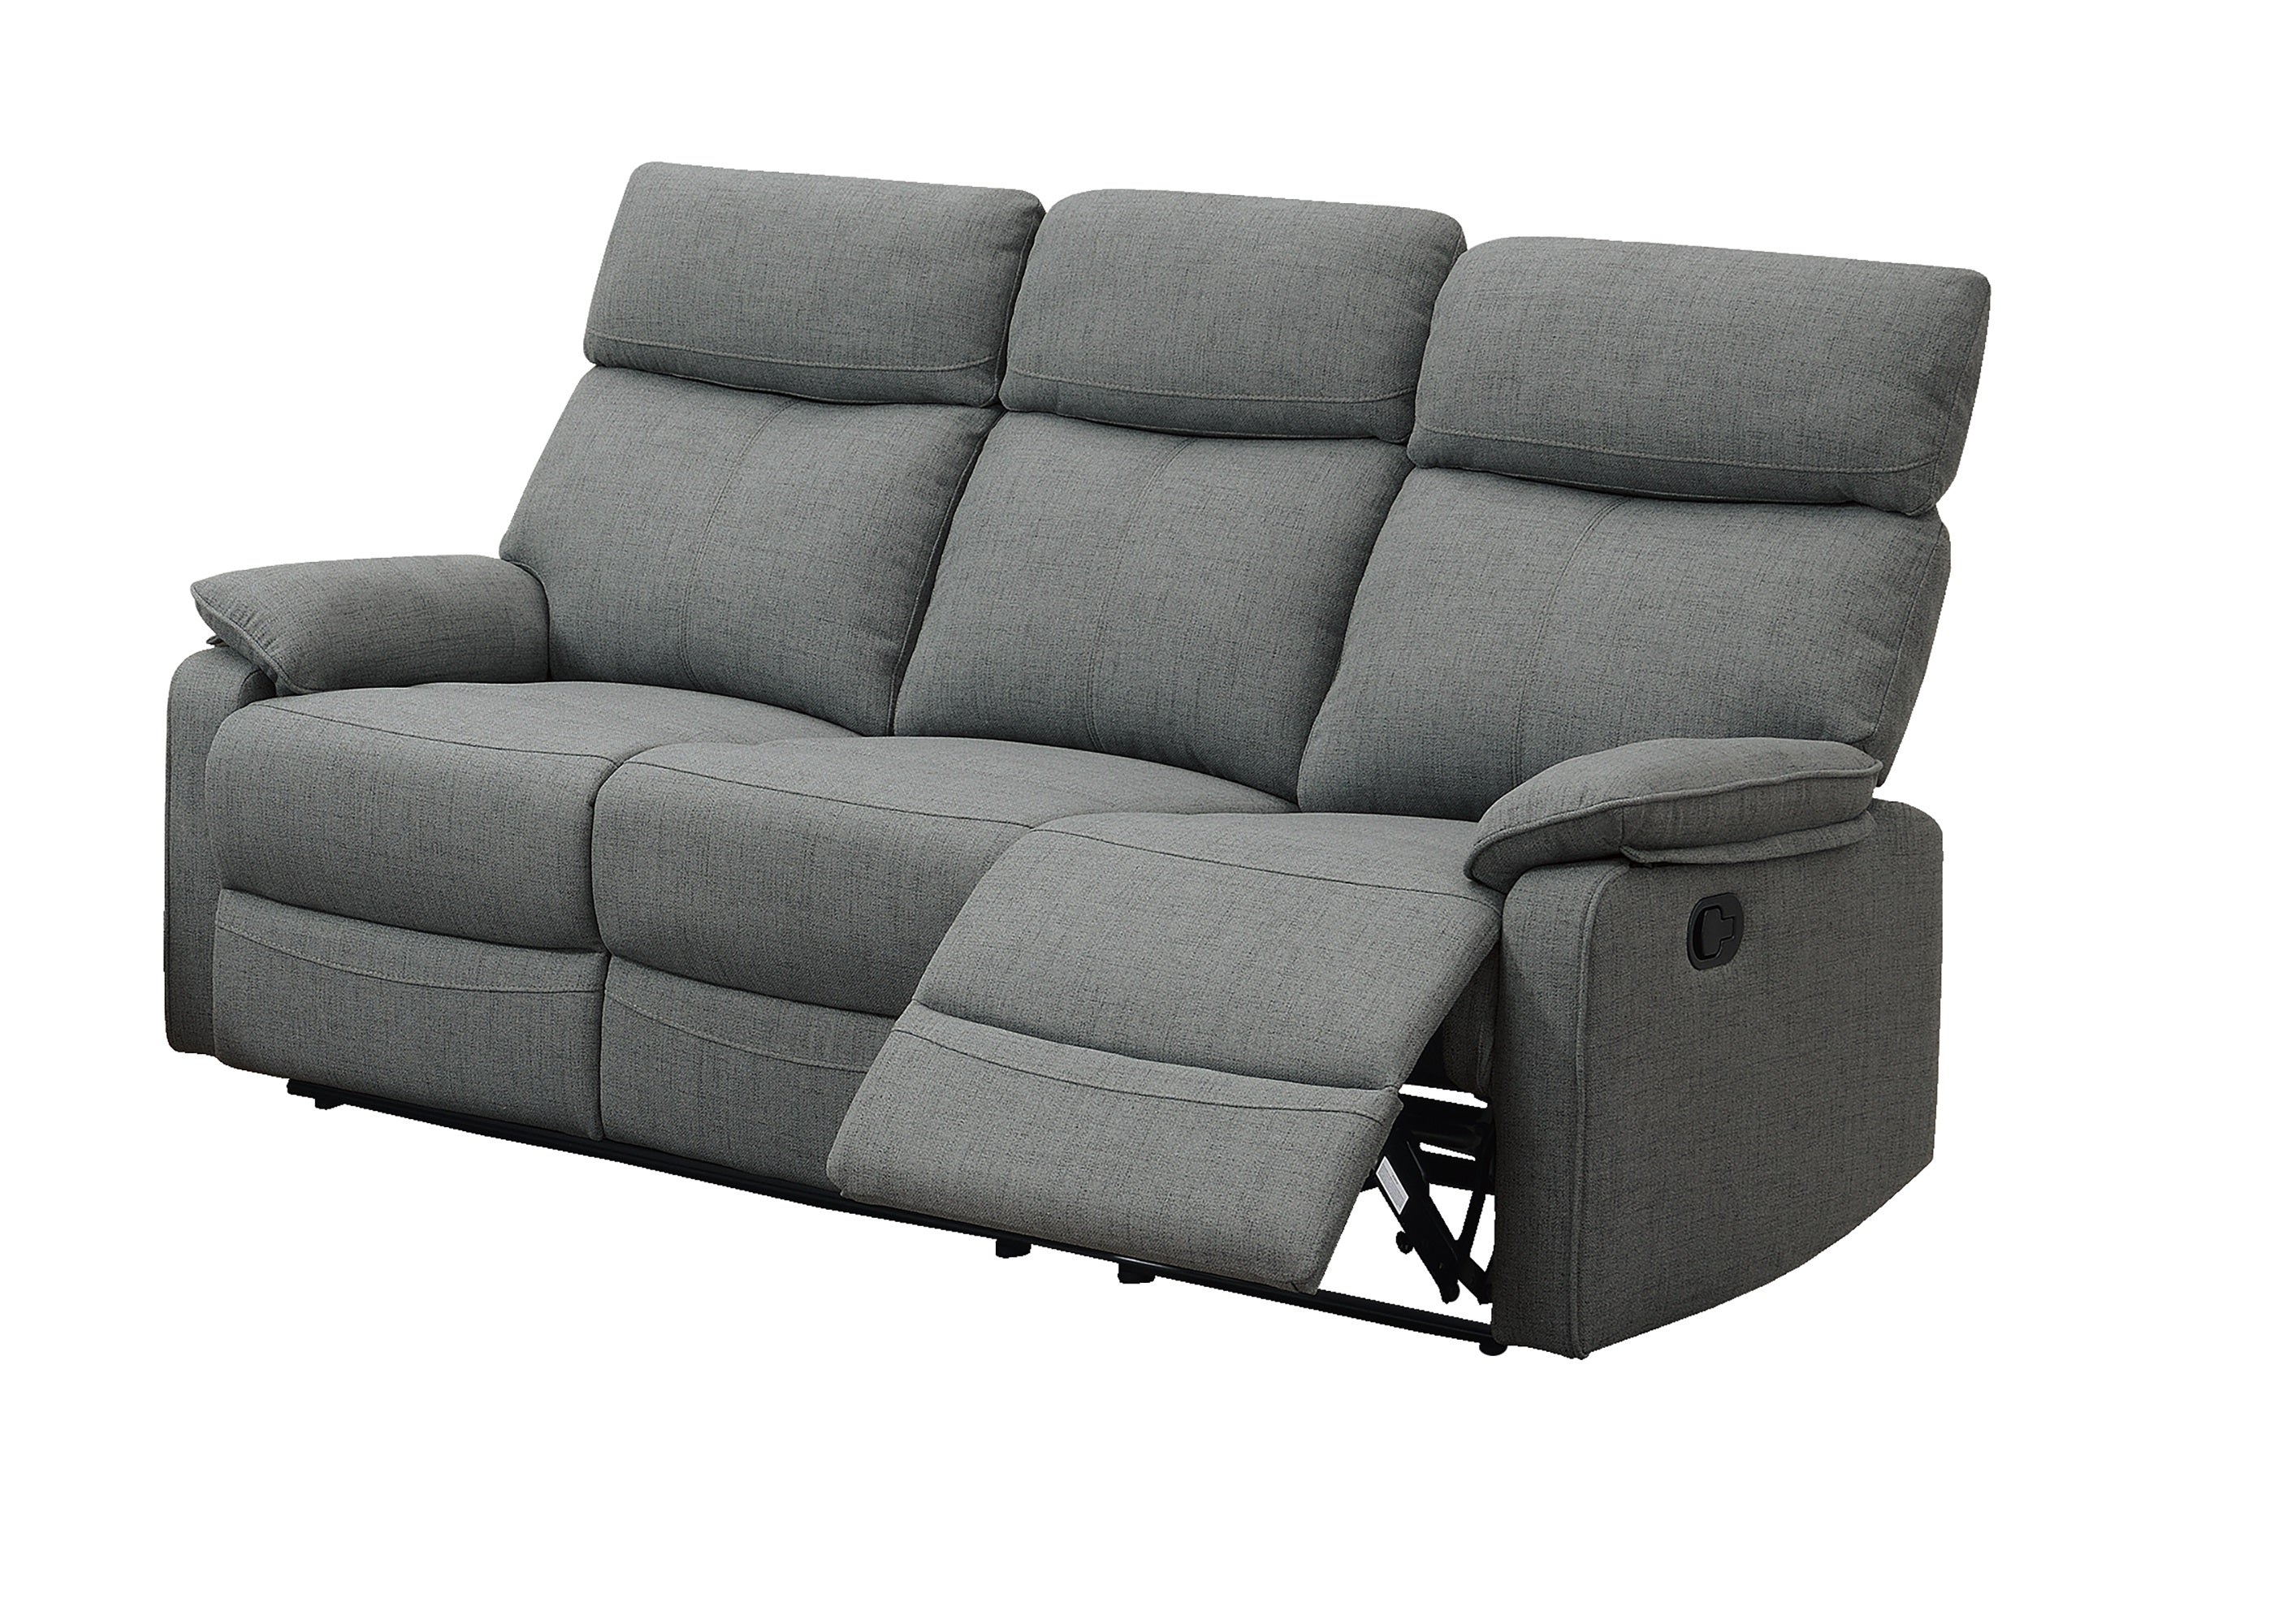 Auroglint Gray Color Burlap Fabric Recliner Motion Sofa 1pc Couch Manual Motion Sofa Living Room Furniture